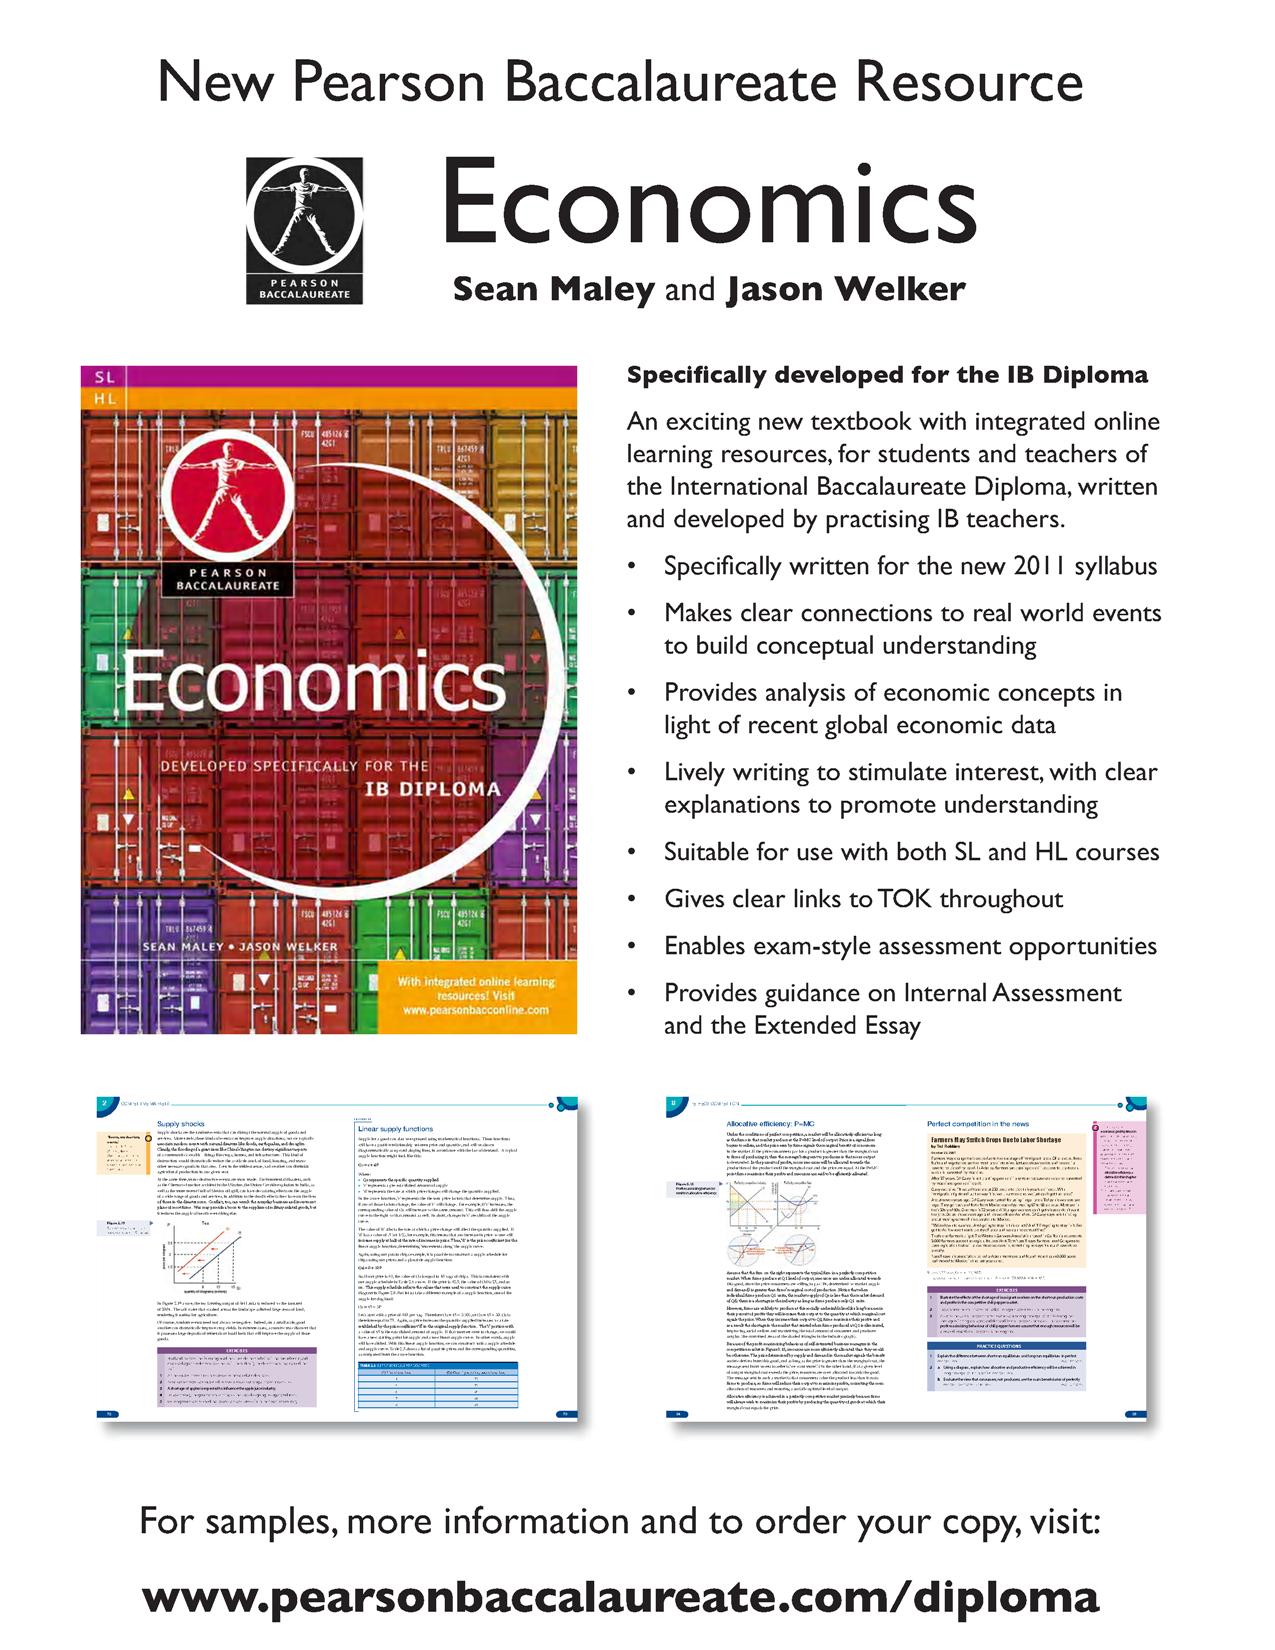 economics for the ib diploma ellie tragakes pdf editor